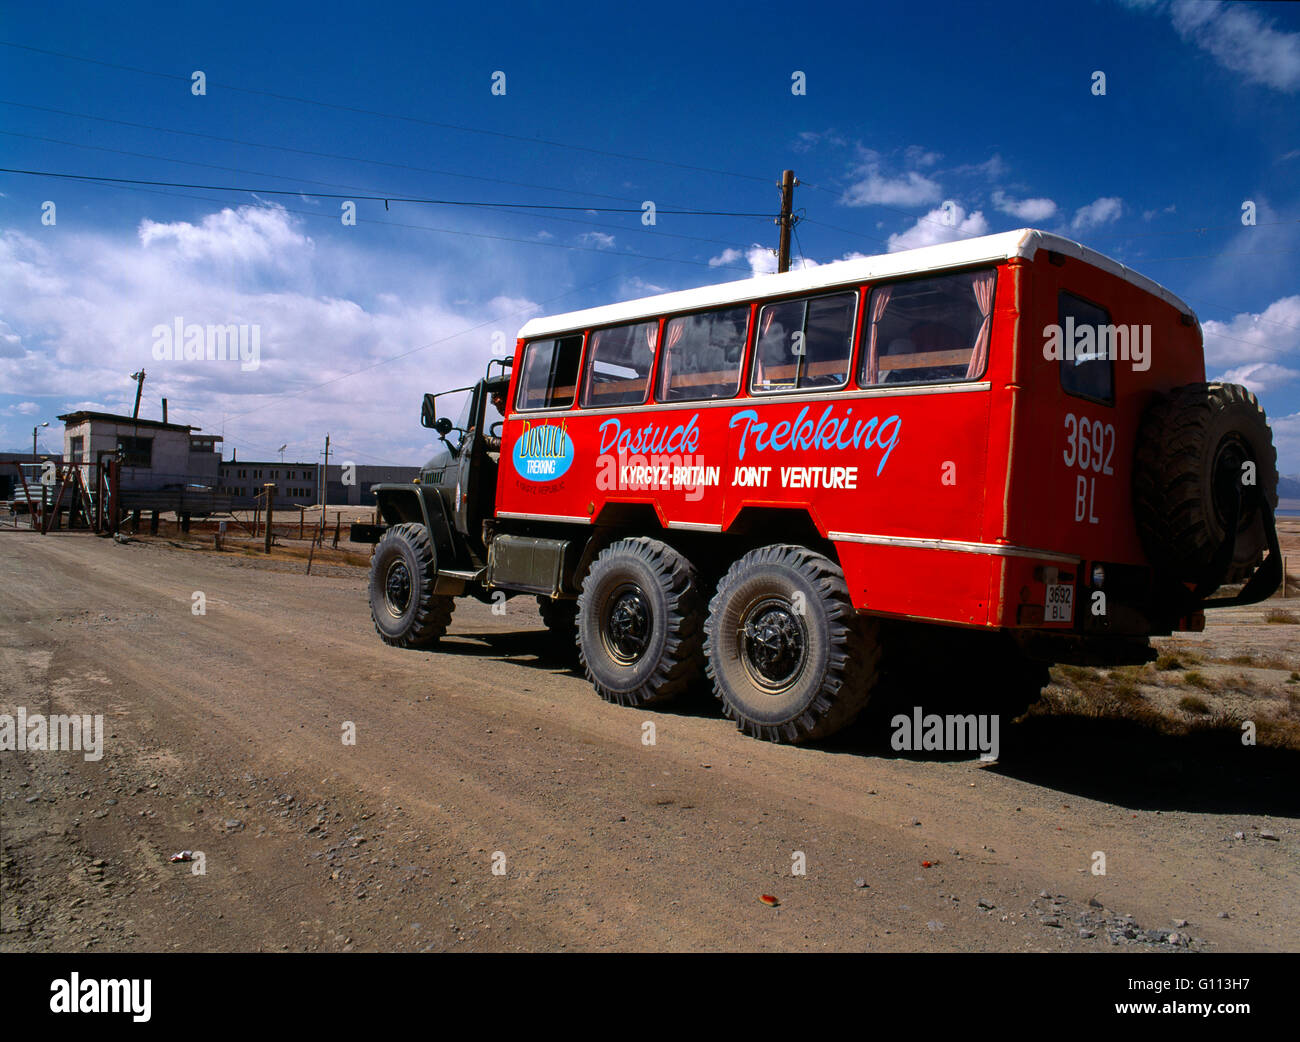 Torugart Pass Kyrgyzstan Entry Gate to Kyrgyzstan & Dostuck Trekking Adventure Travel Company Truck - Kyrgyz British Joint Venture Stock Photo